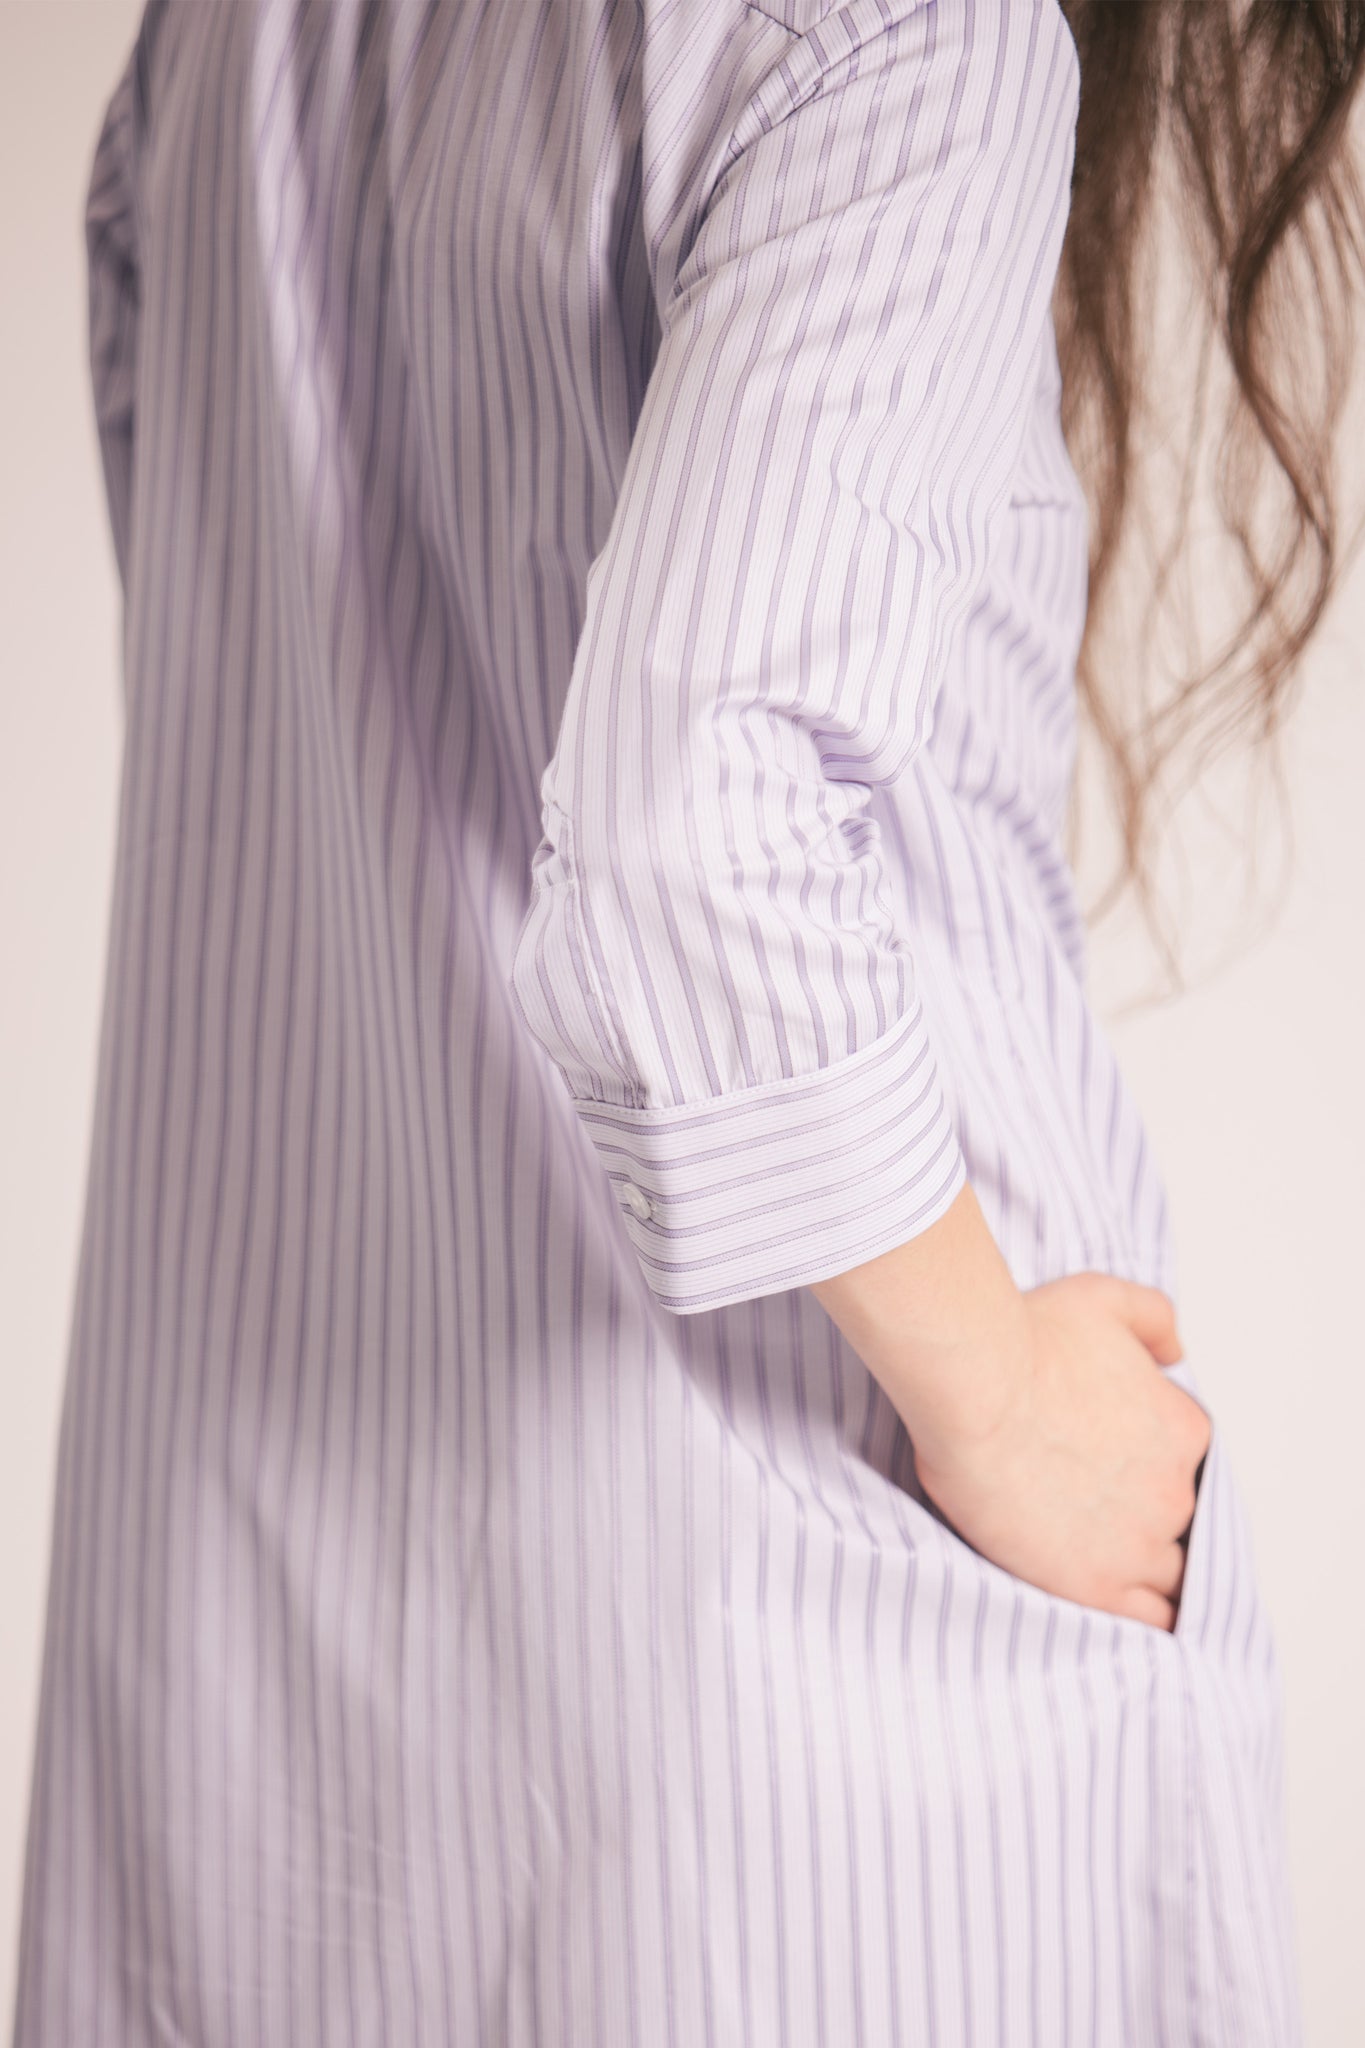 RYAN ¾ Sleeve Shirtdress - Lavender Tonal Stripe